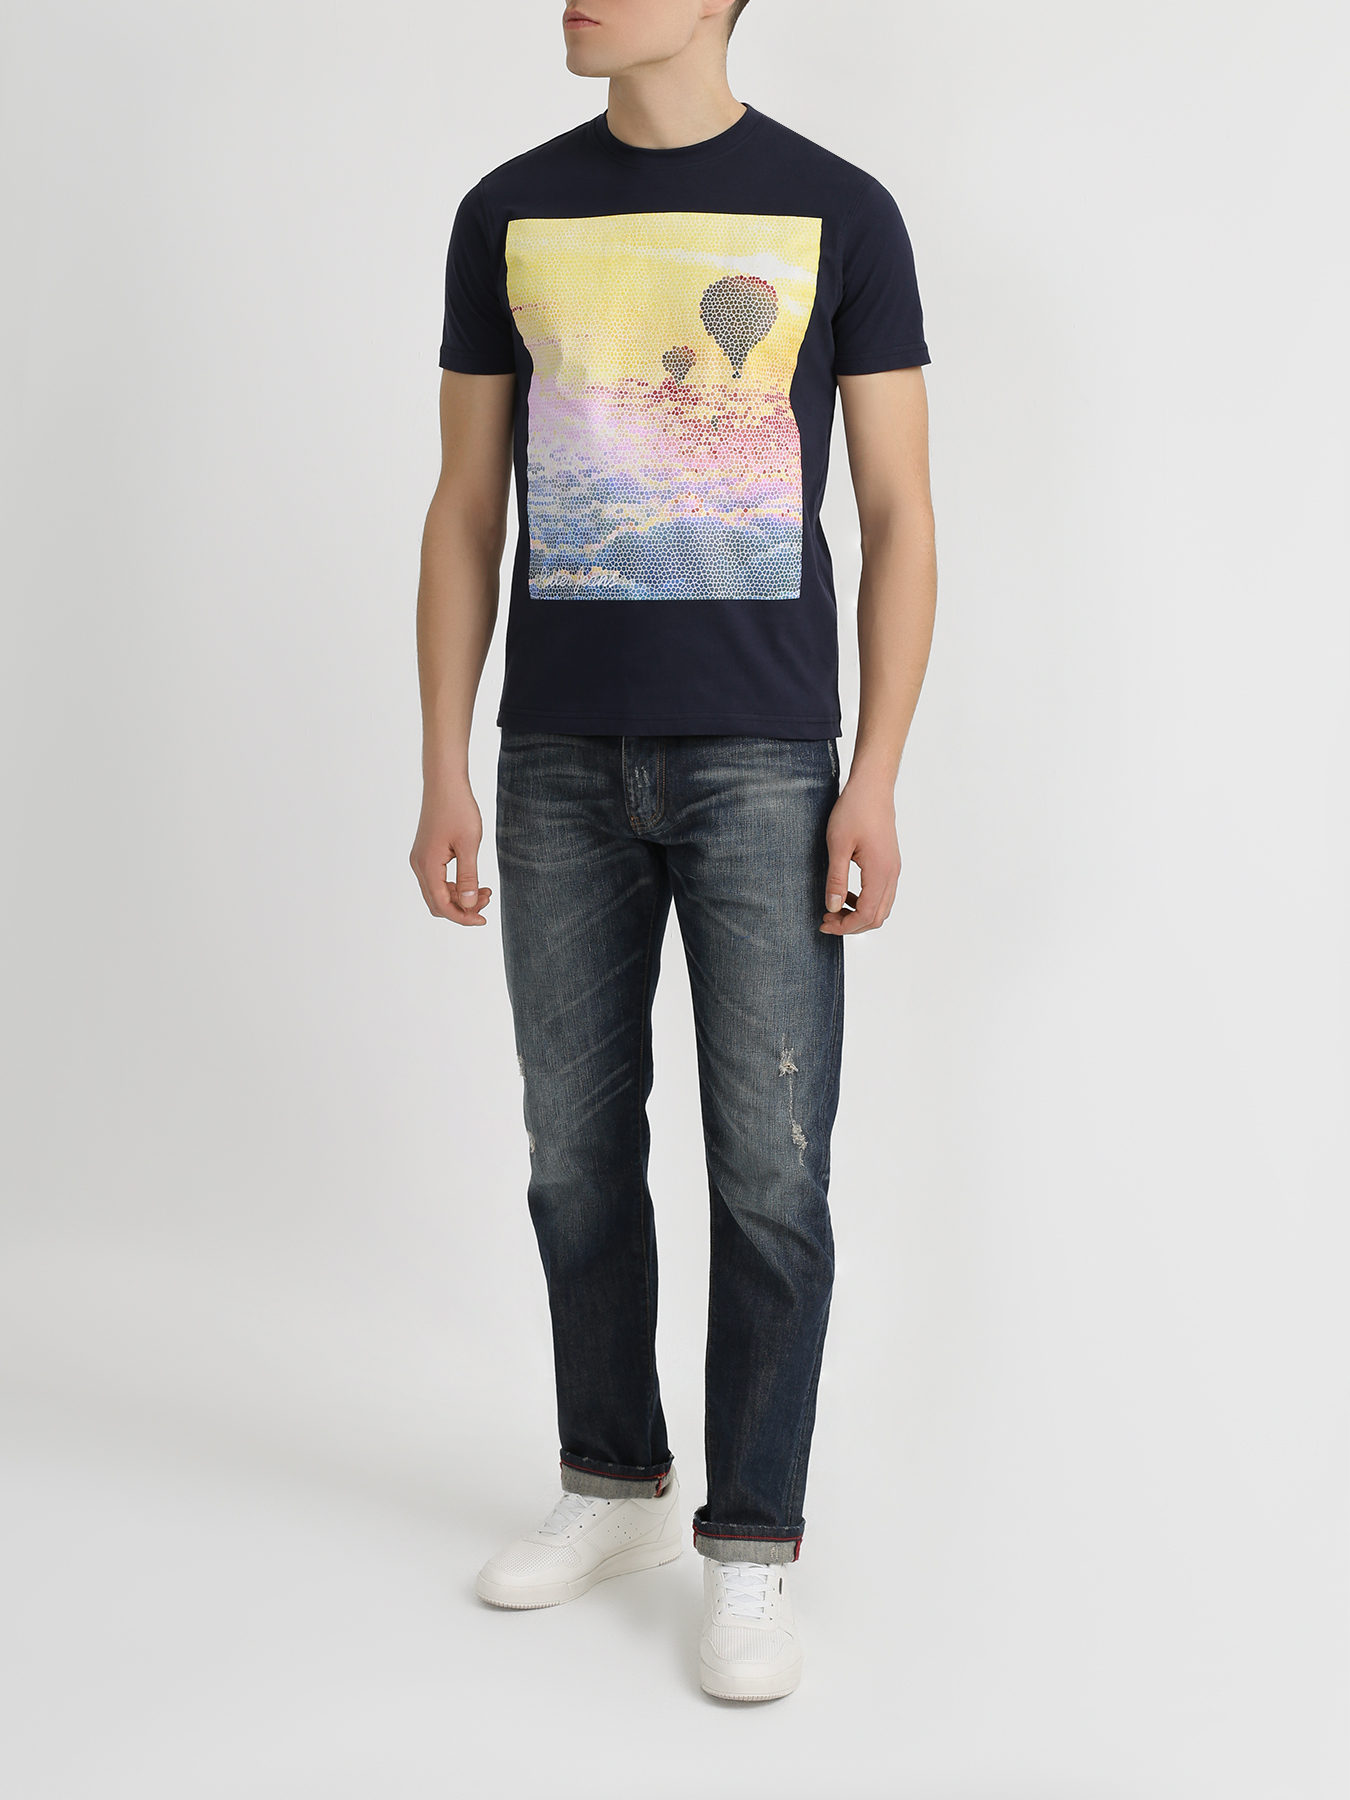 Ritter Jeans Хлопковая футболка с принтом 322481-025 Фото 1